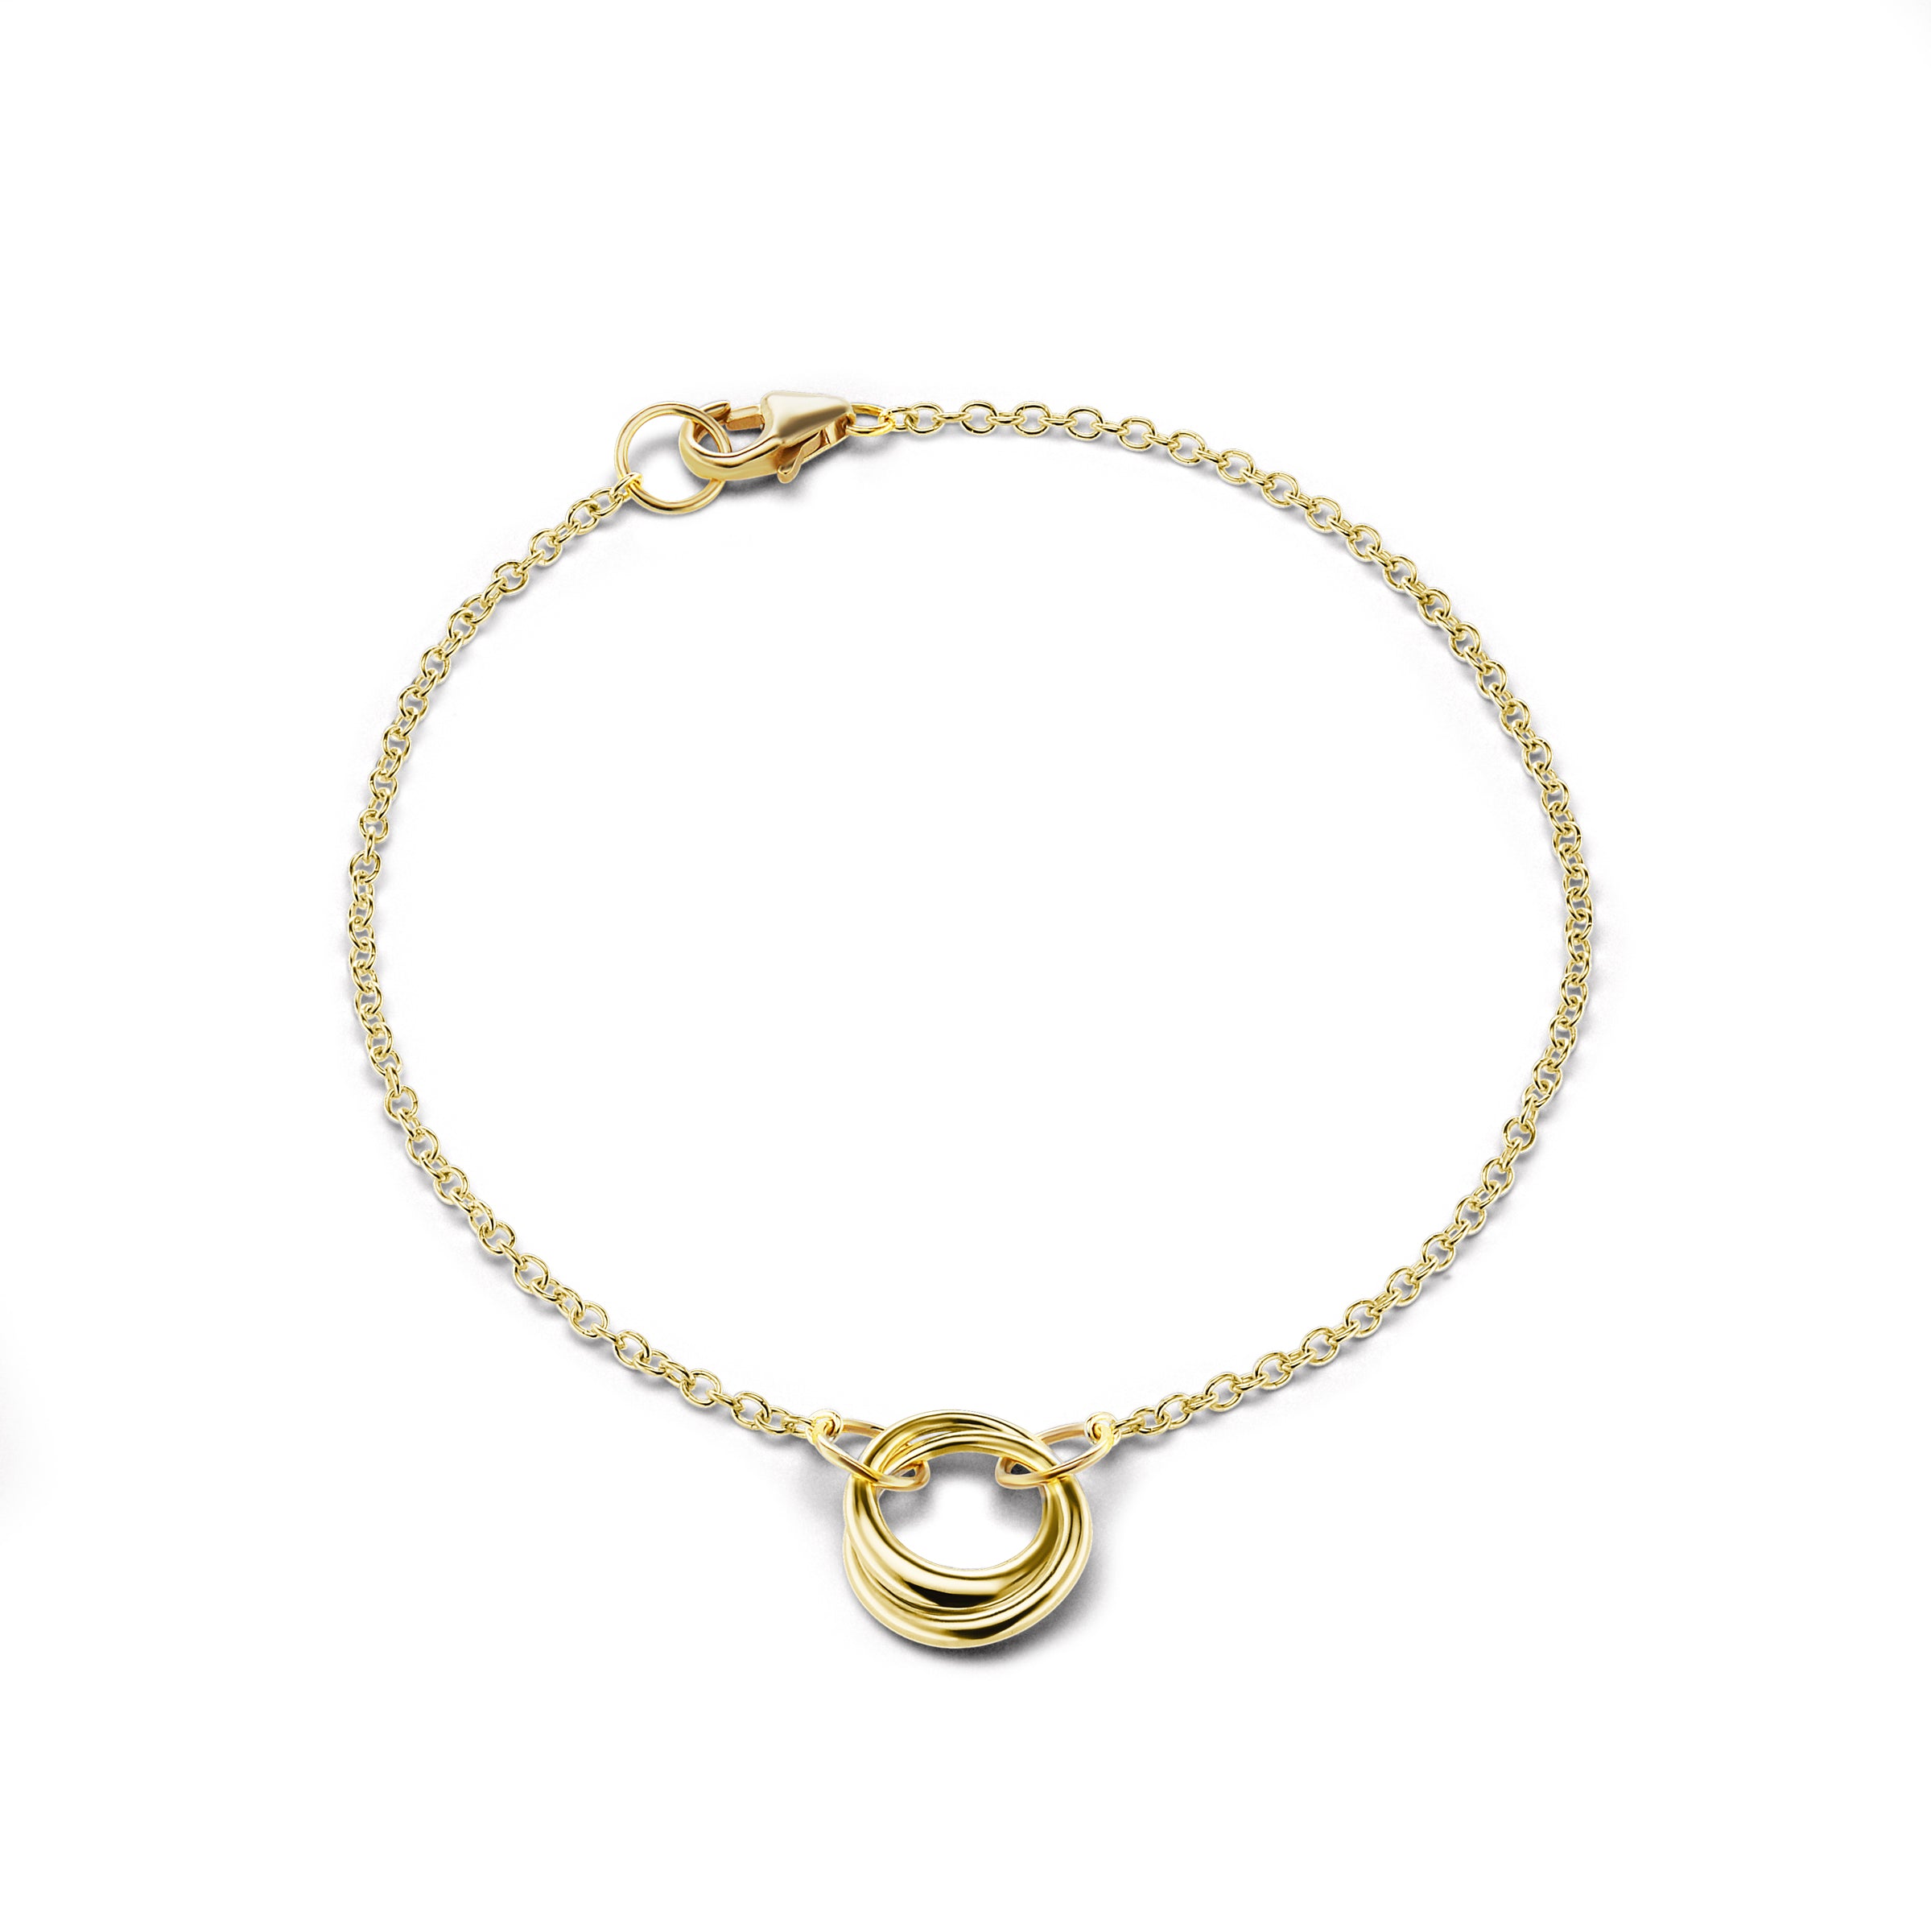 The Gold Encircle Bracelet